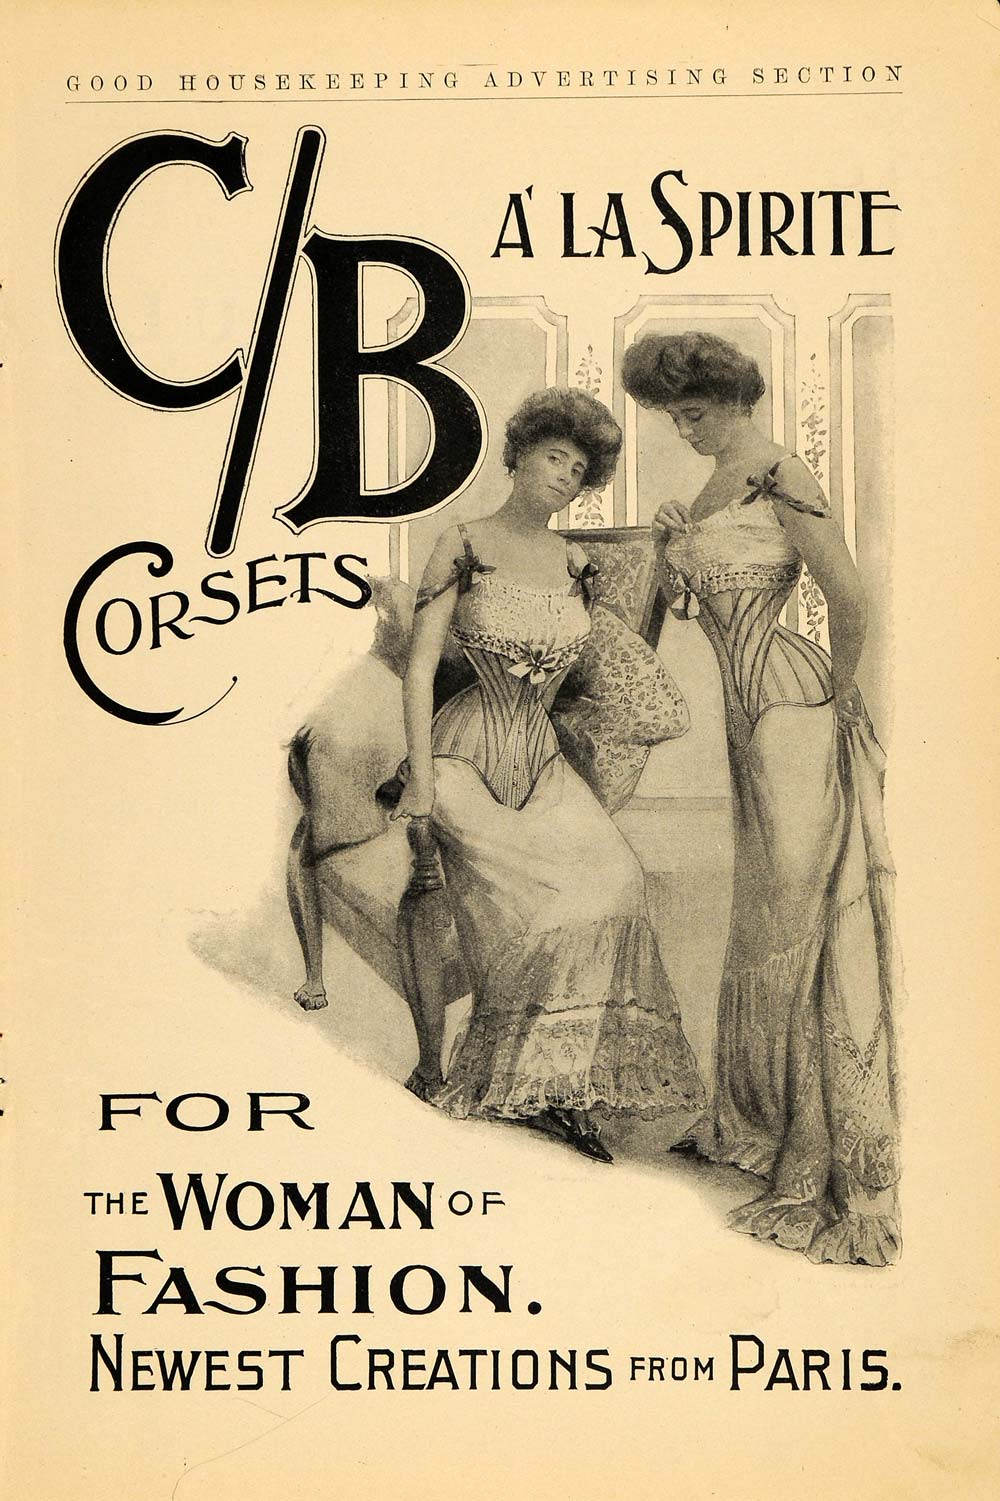 1905 Ad Women's Paris Fashion C/B Corsets A La Spirite - ORIGINAL GH2